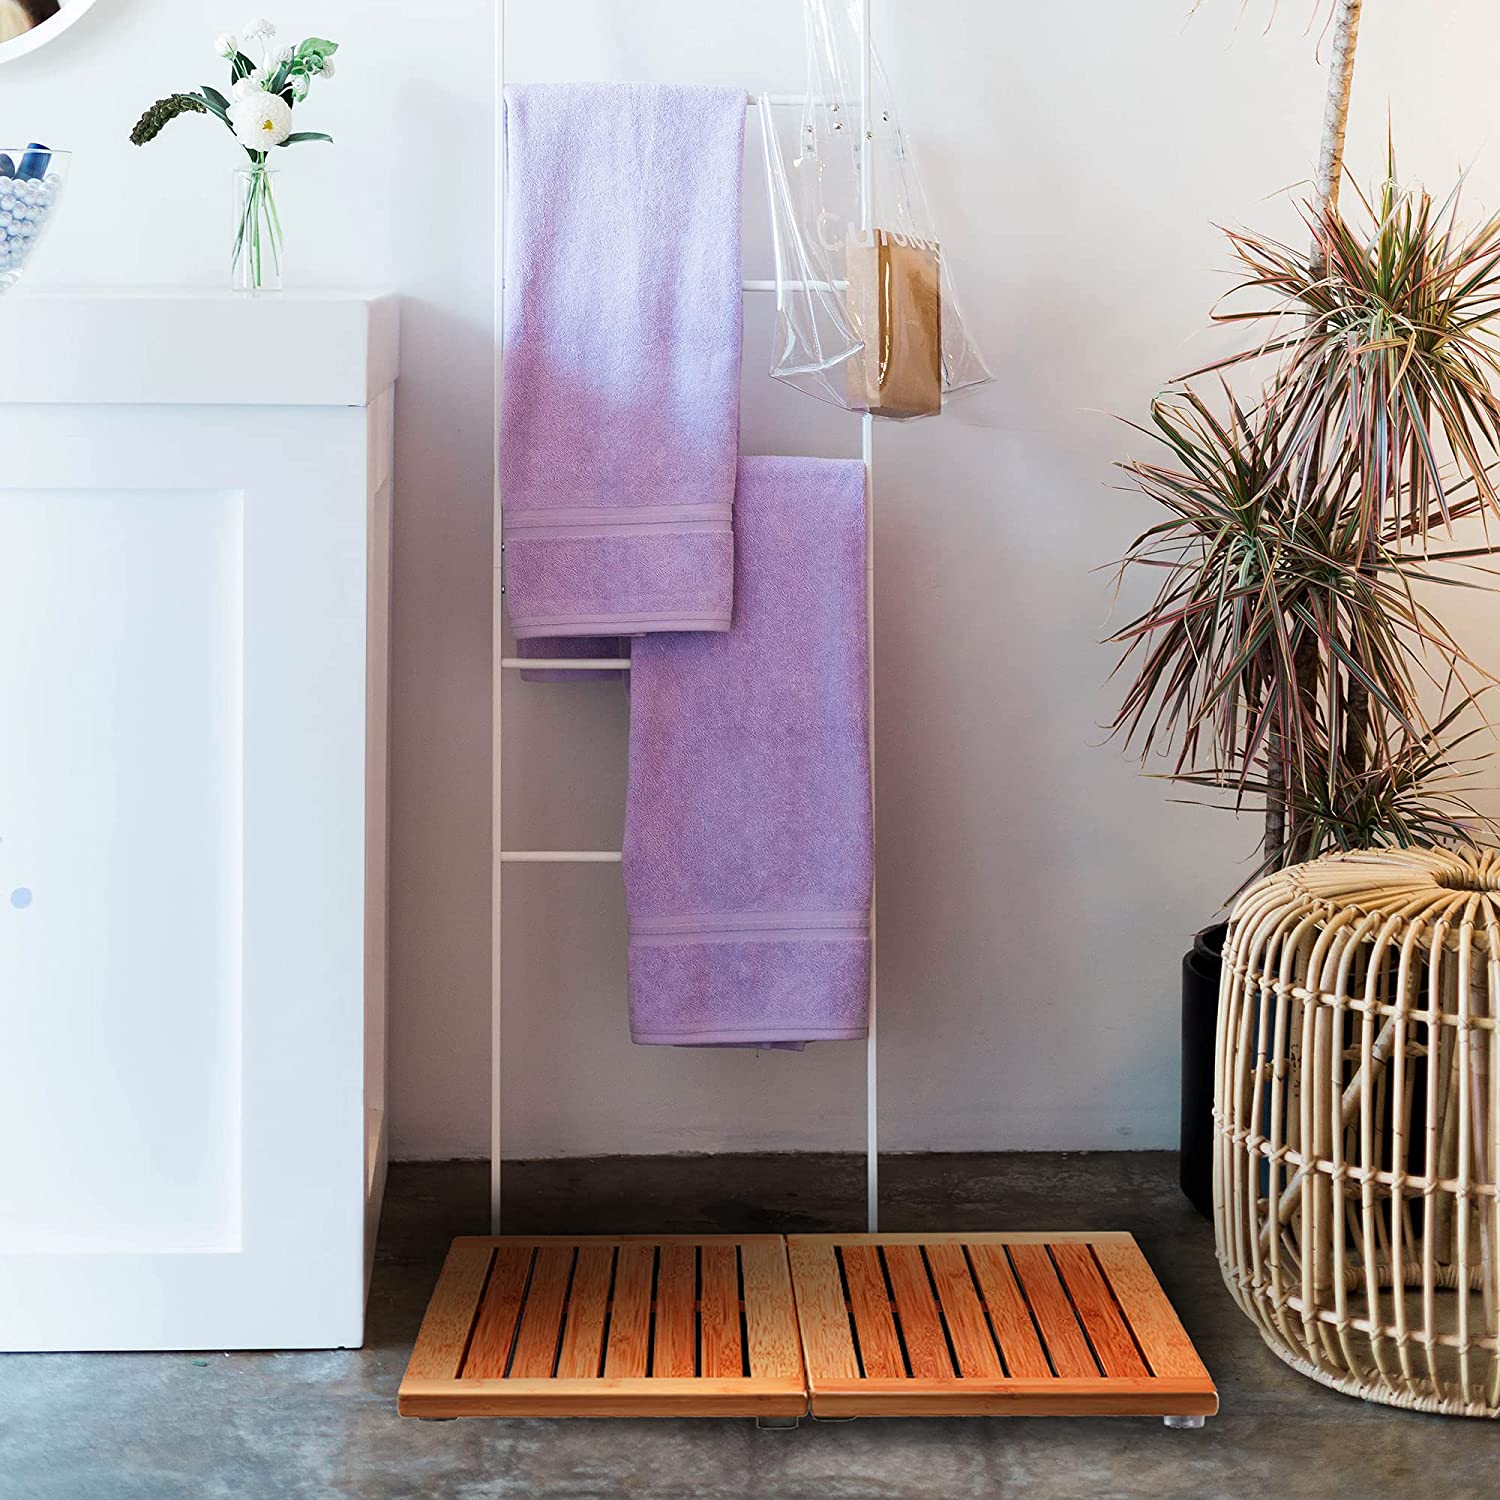 BambooMN Bath Mat Non Slip, Mold Resistant Wood Stripe Design For Bathroom  Or Shower Floor From Liuliumayy, $272.25